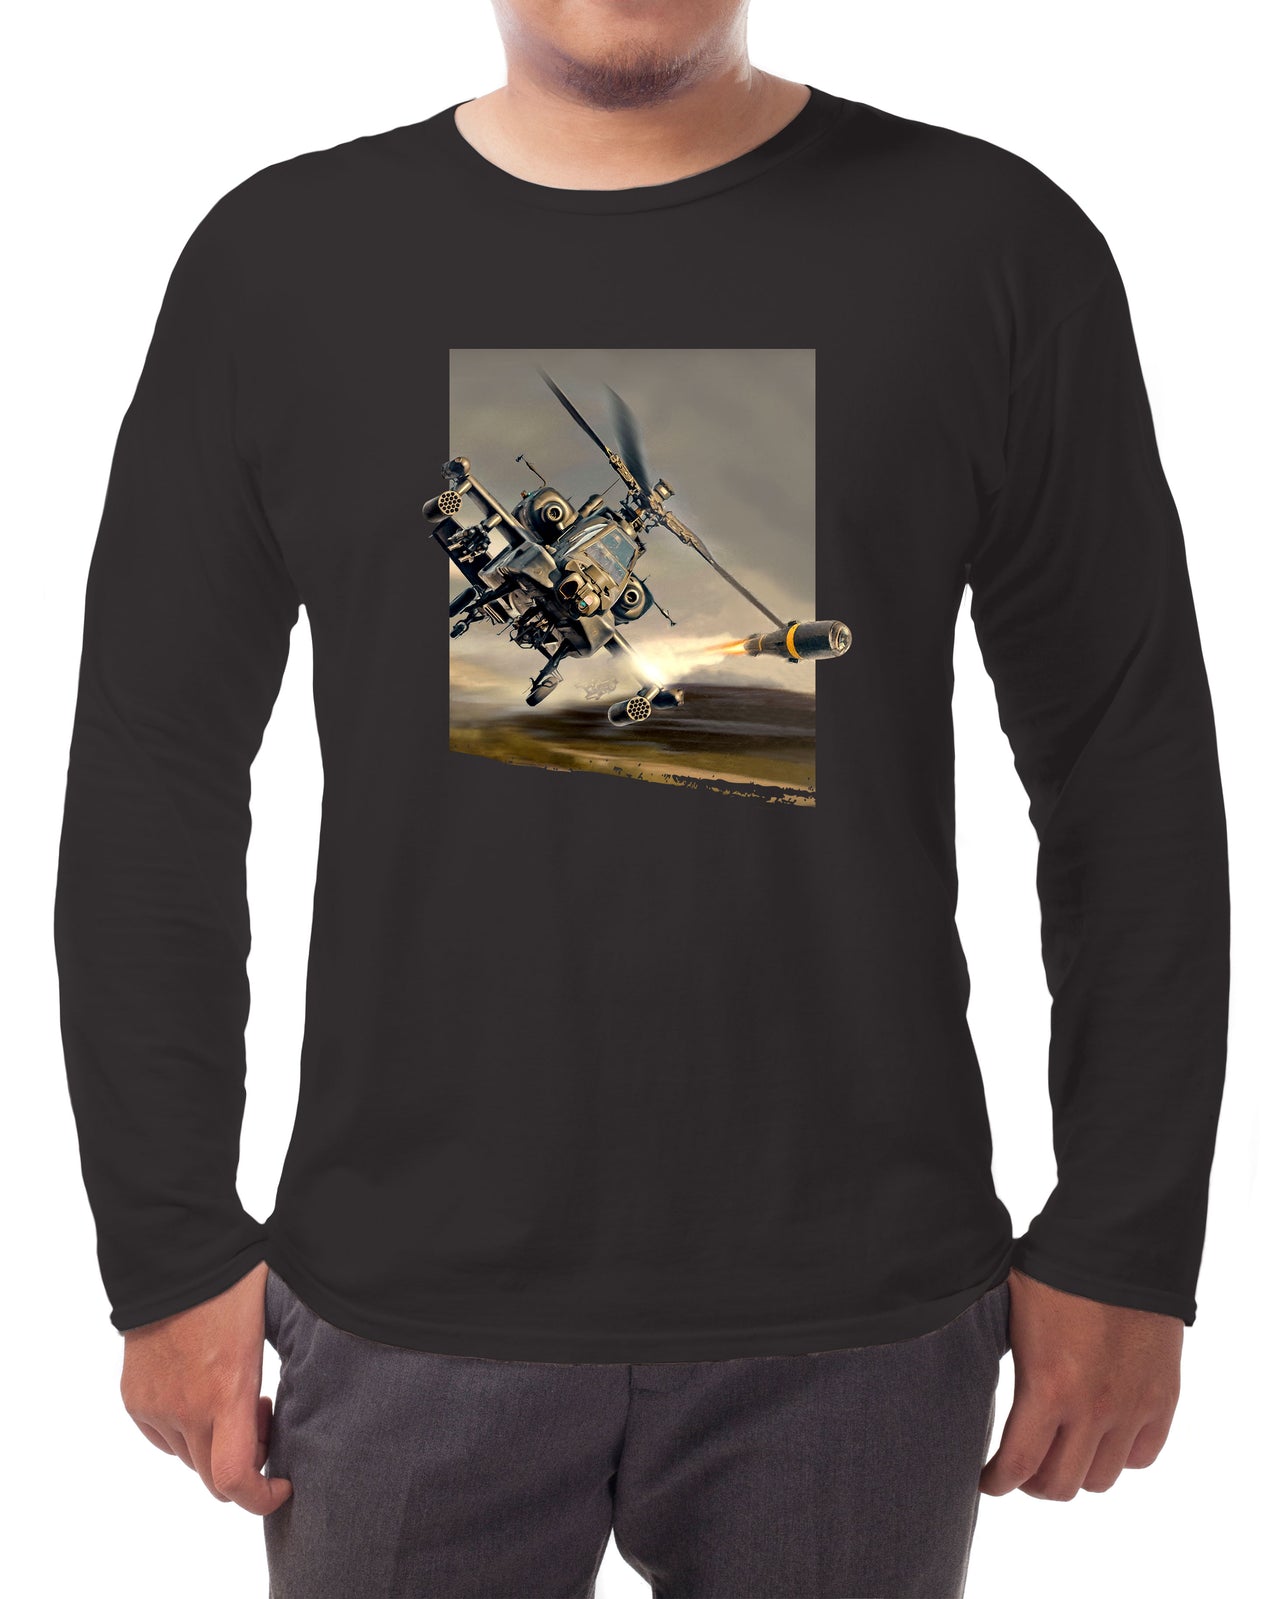 AH-64 Apache - Long-sleeve T-shirt